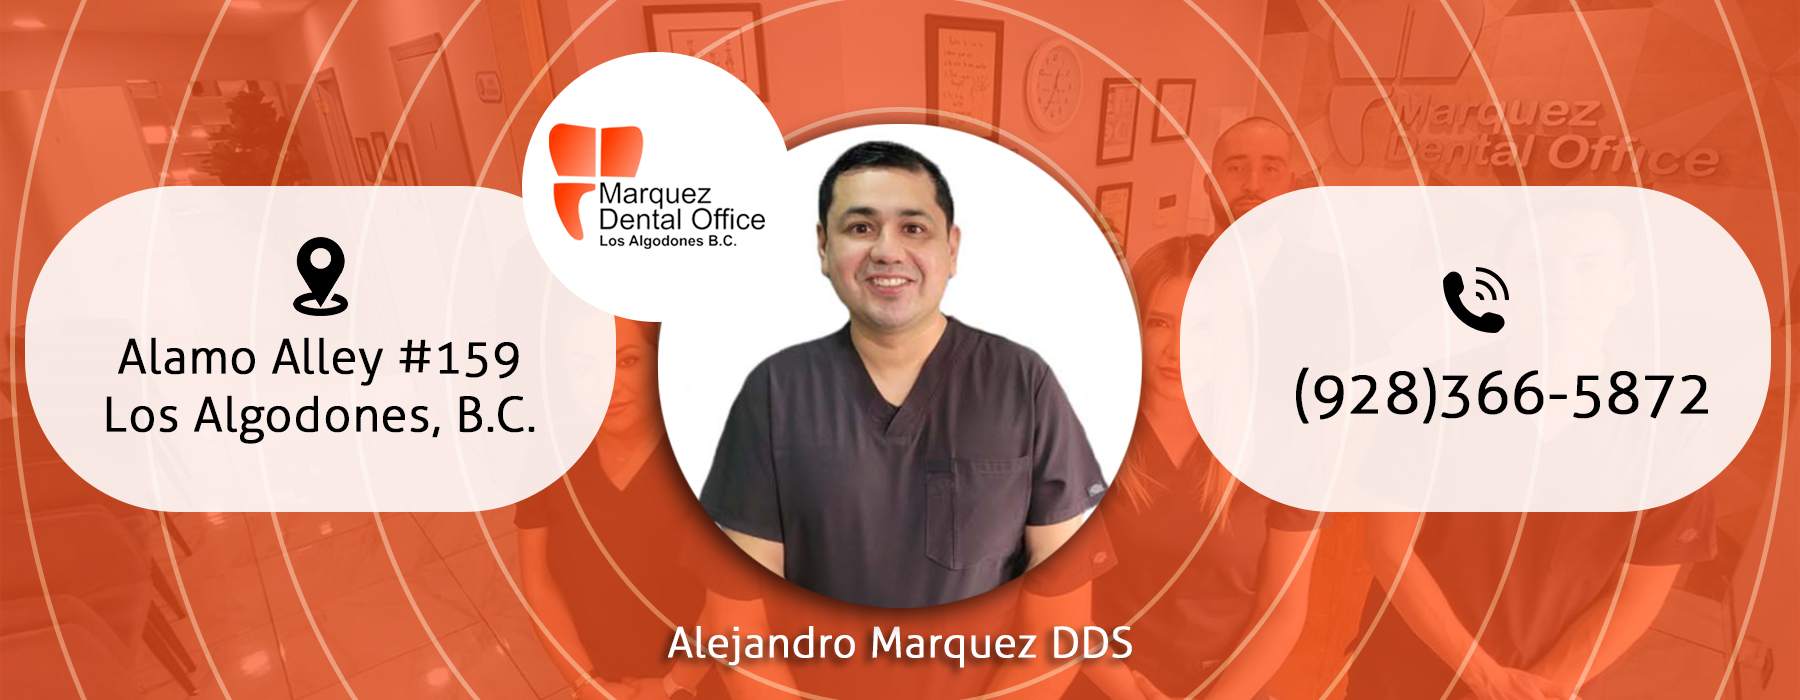  DDS Alejandro Marquez Dental Office